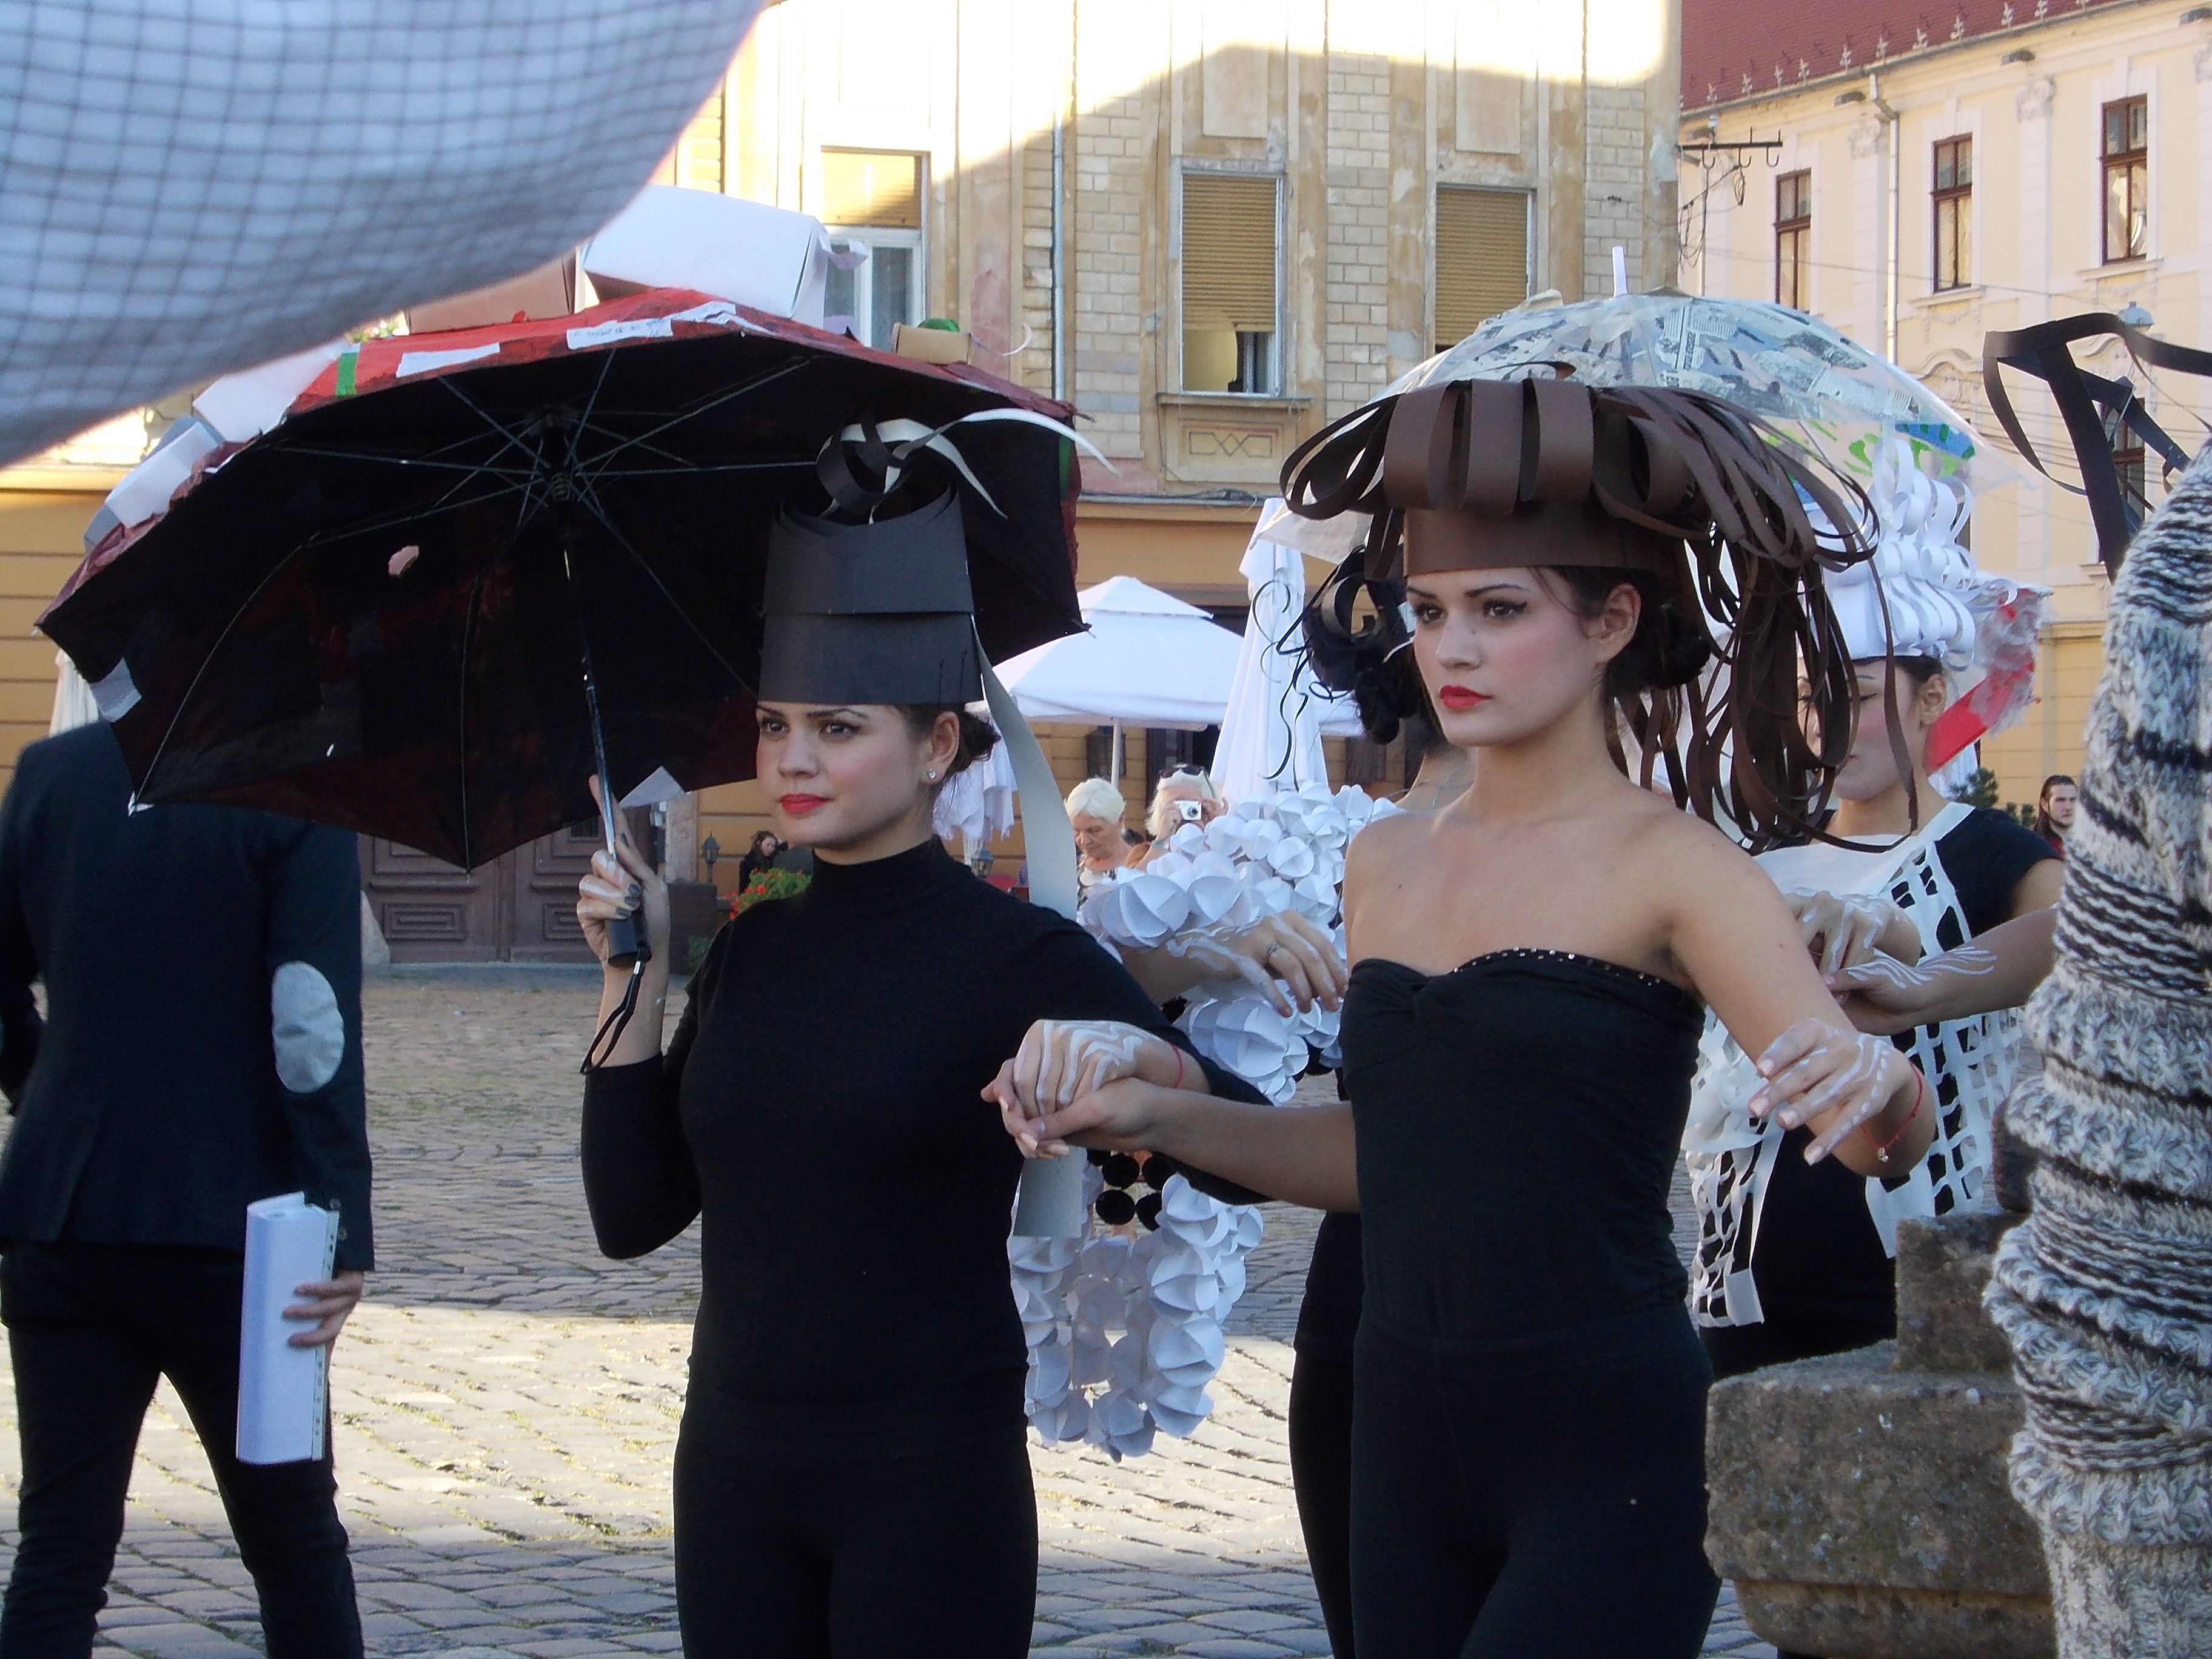 Prezentare de moda inedita in stil baroc, in Piata Unirii din Timisoara. Vezi GALERIE FOTO